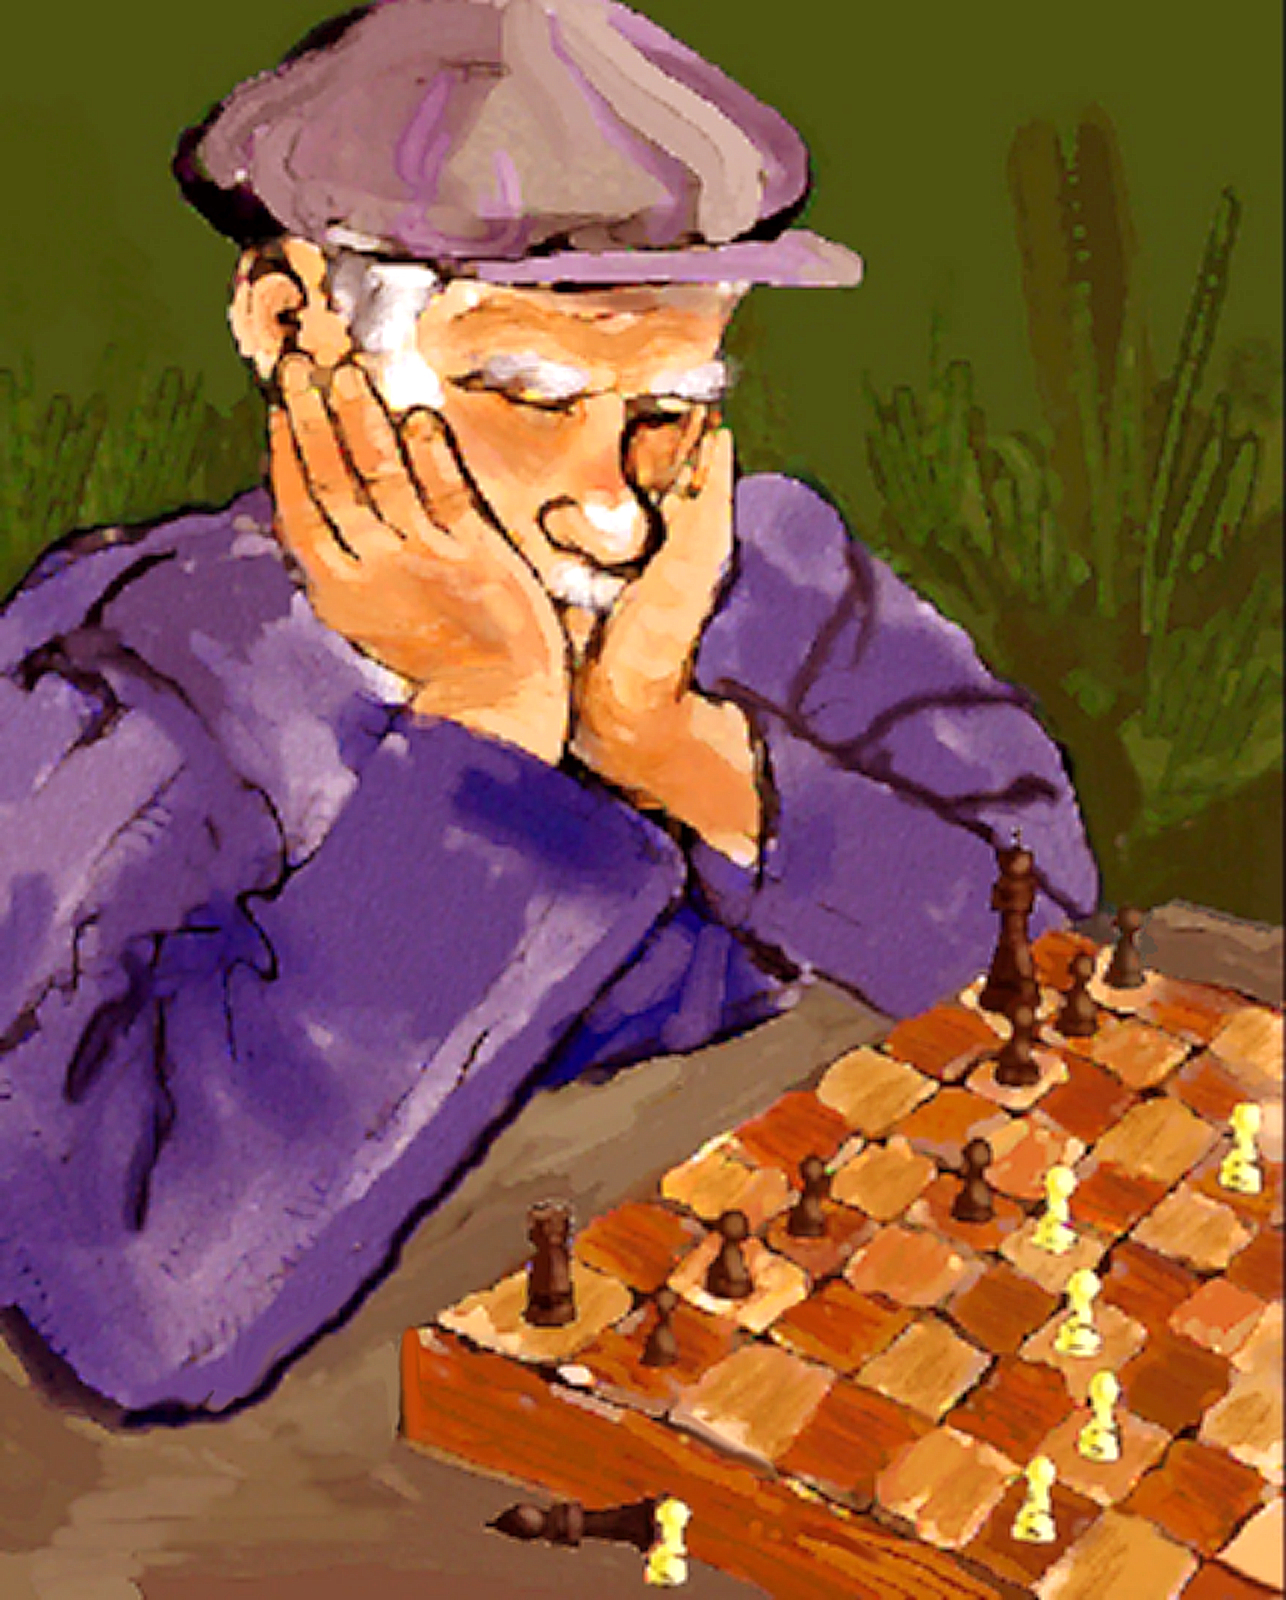 Chess Network - Chess greats Boris Spassky, Mikhail Tal & Tigran Petrosian,  1958